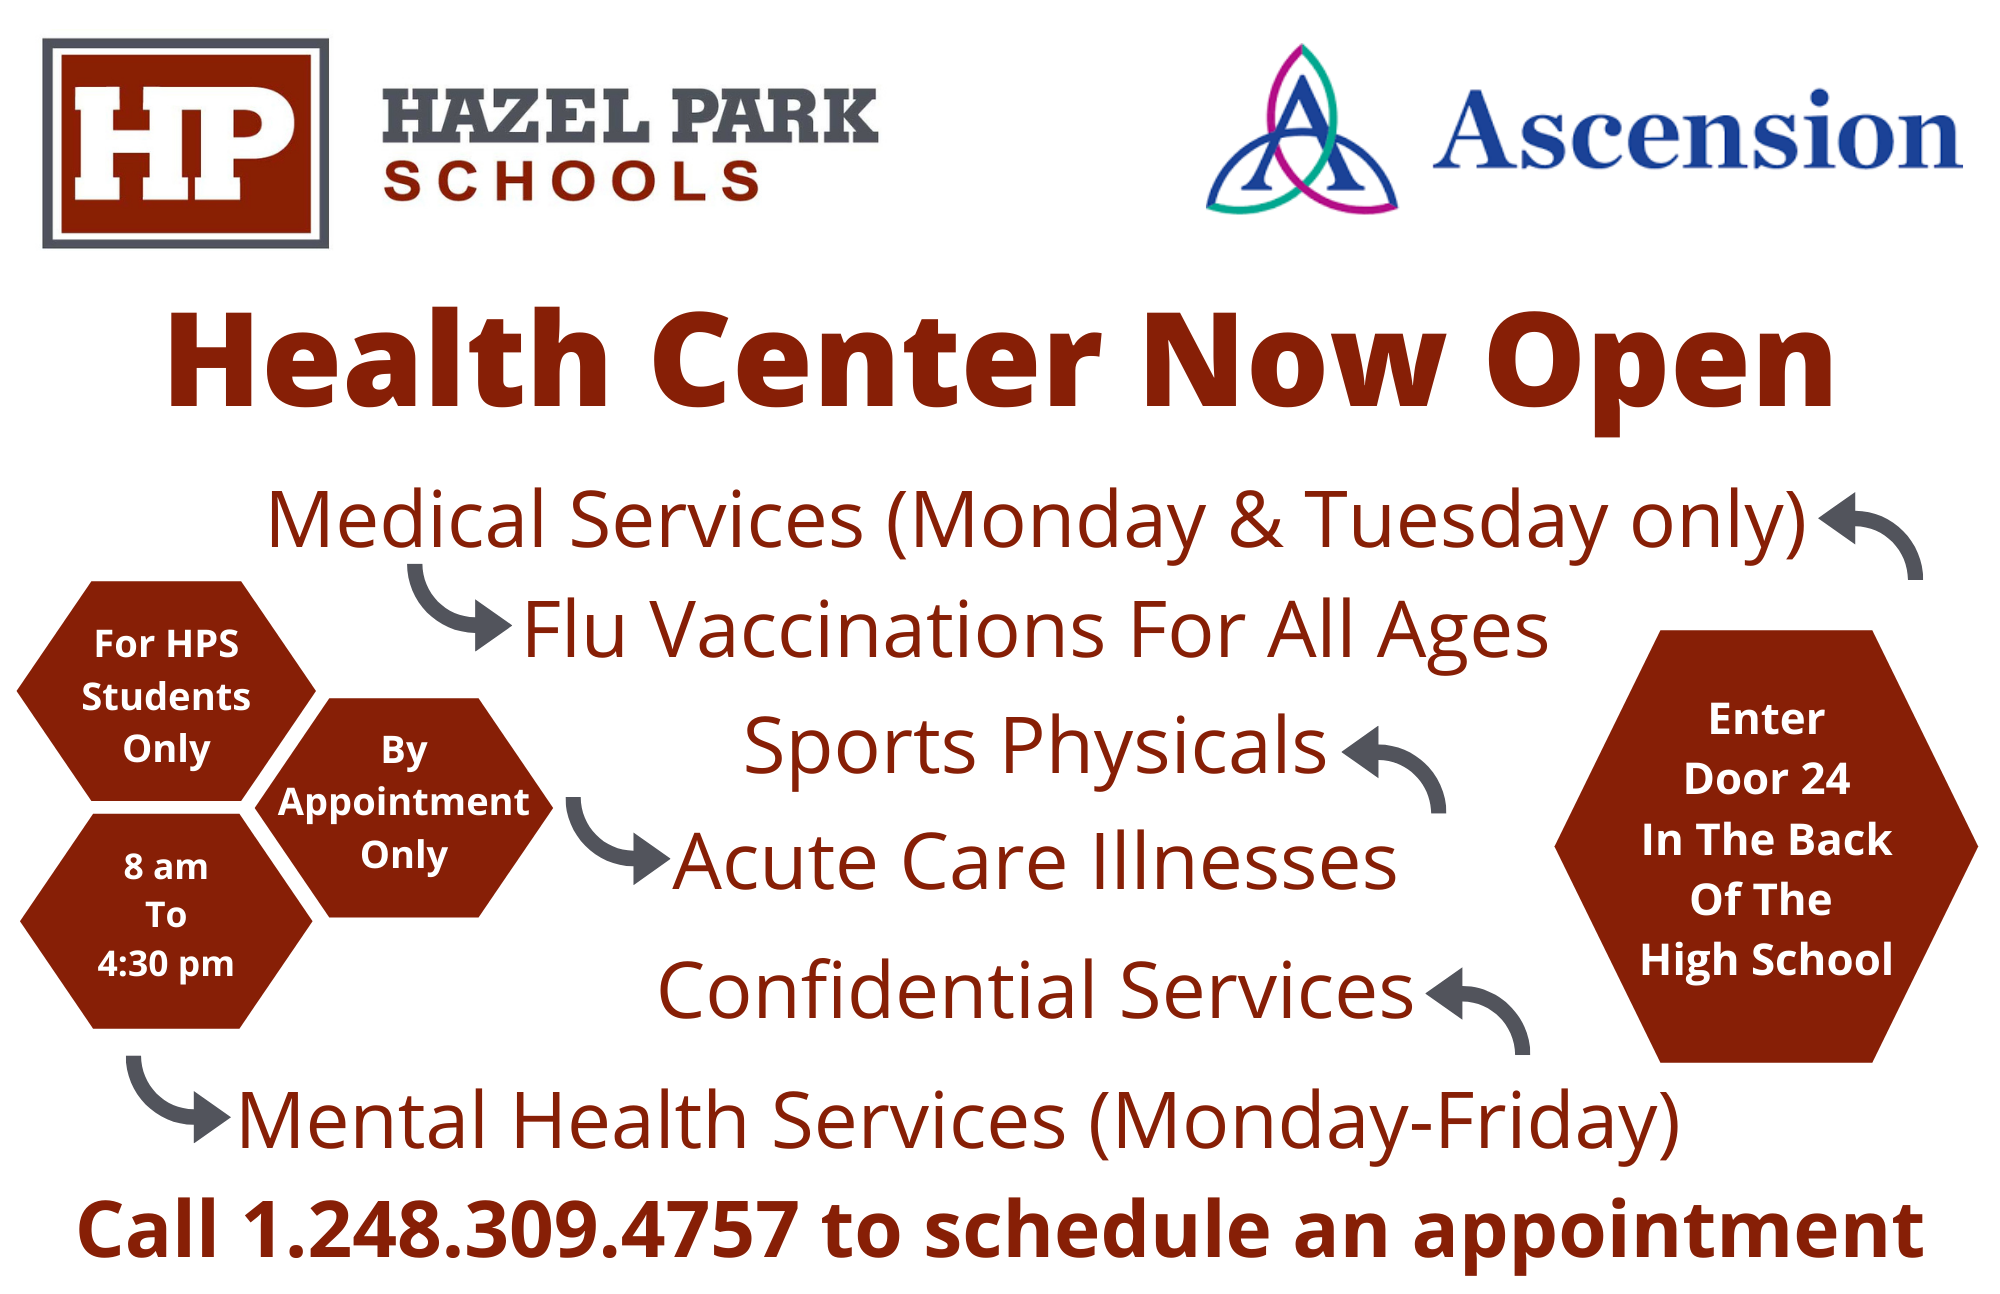 Ascension Health Center - Hazel Park High School - Secondary - Schools